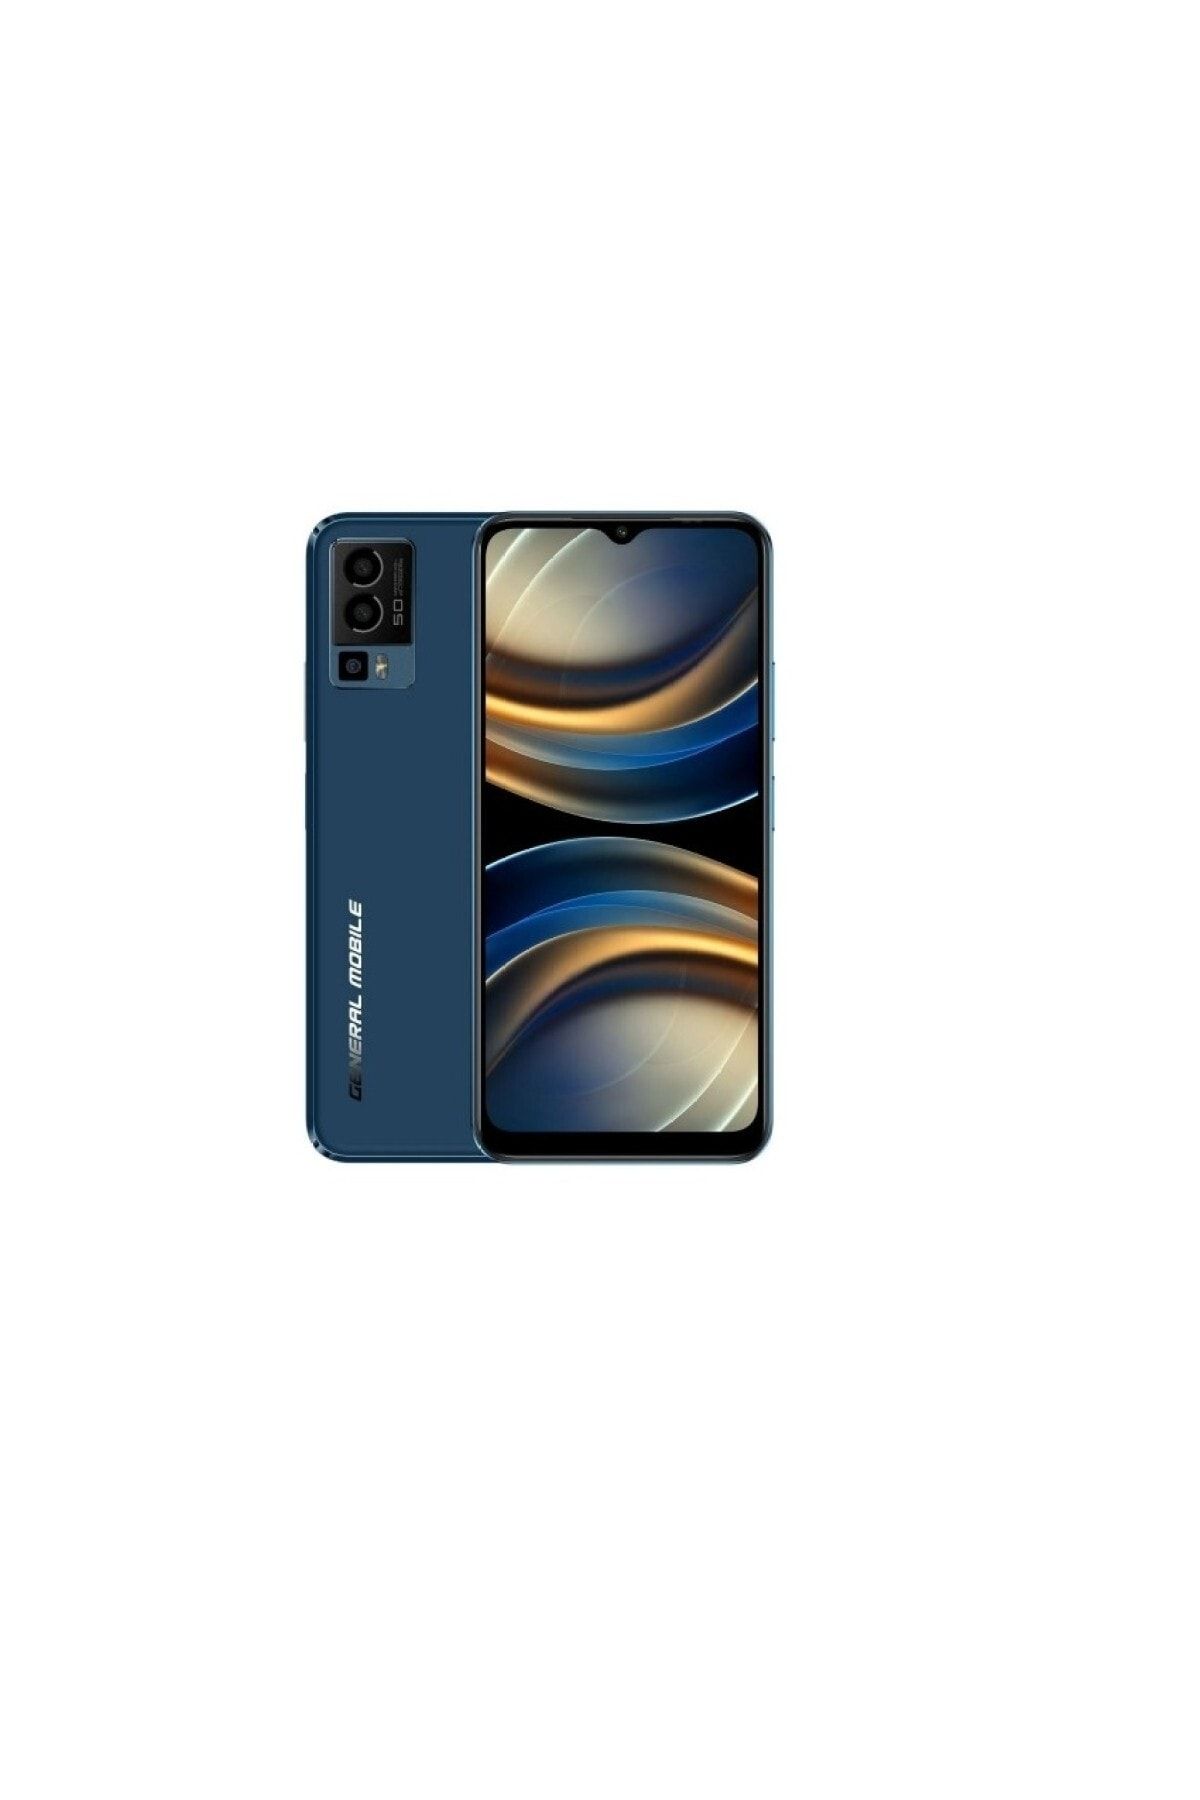 General Mobile Gm 23 Dual (128 GB Hafıza/ 4+4 Genişletilmiş Ram) Mavi Cep Telefonu